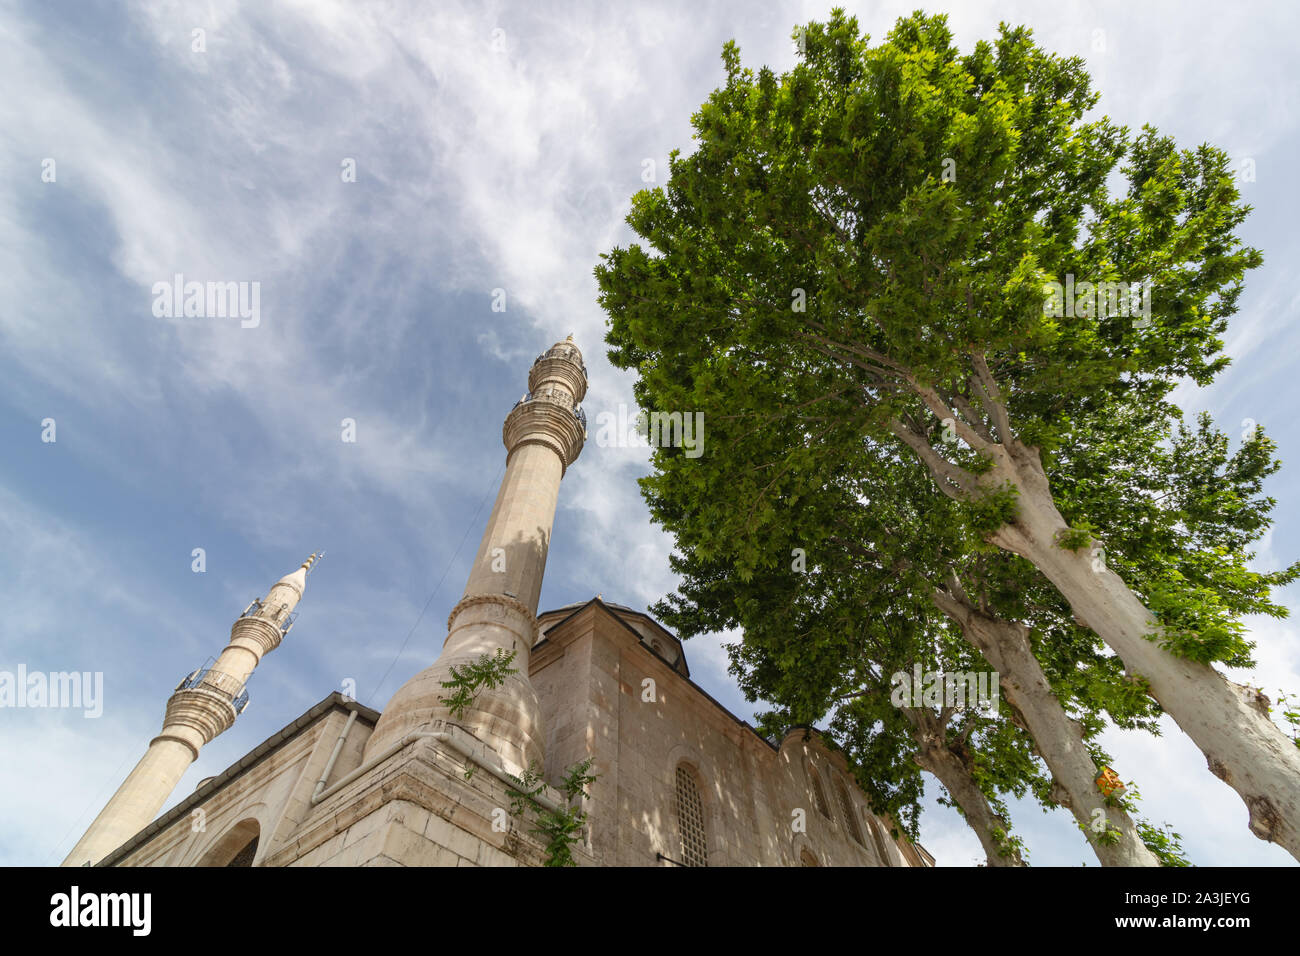 Yeni Cami (New Mosque) in Malatya Stock Photo